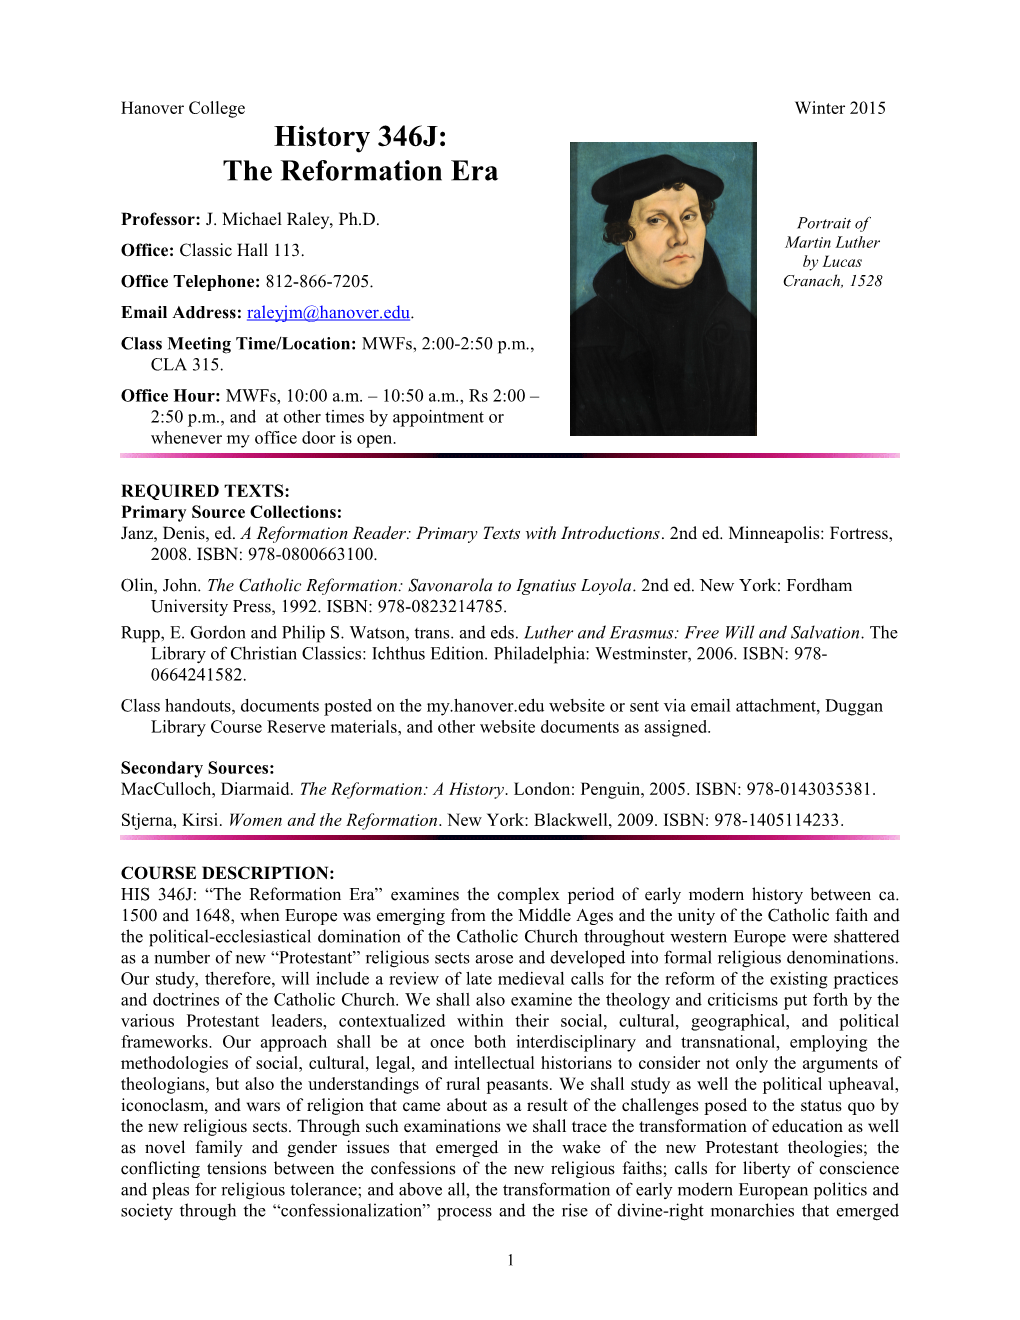 The Reformation Era